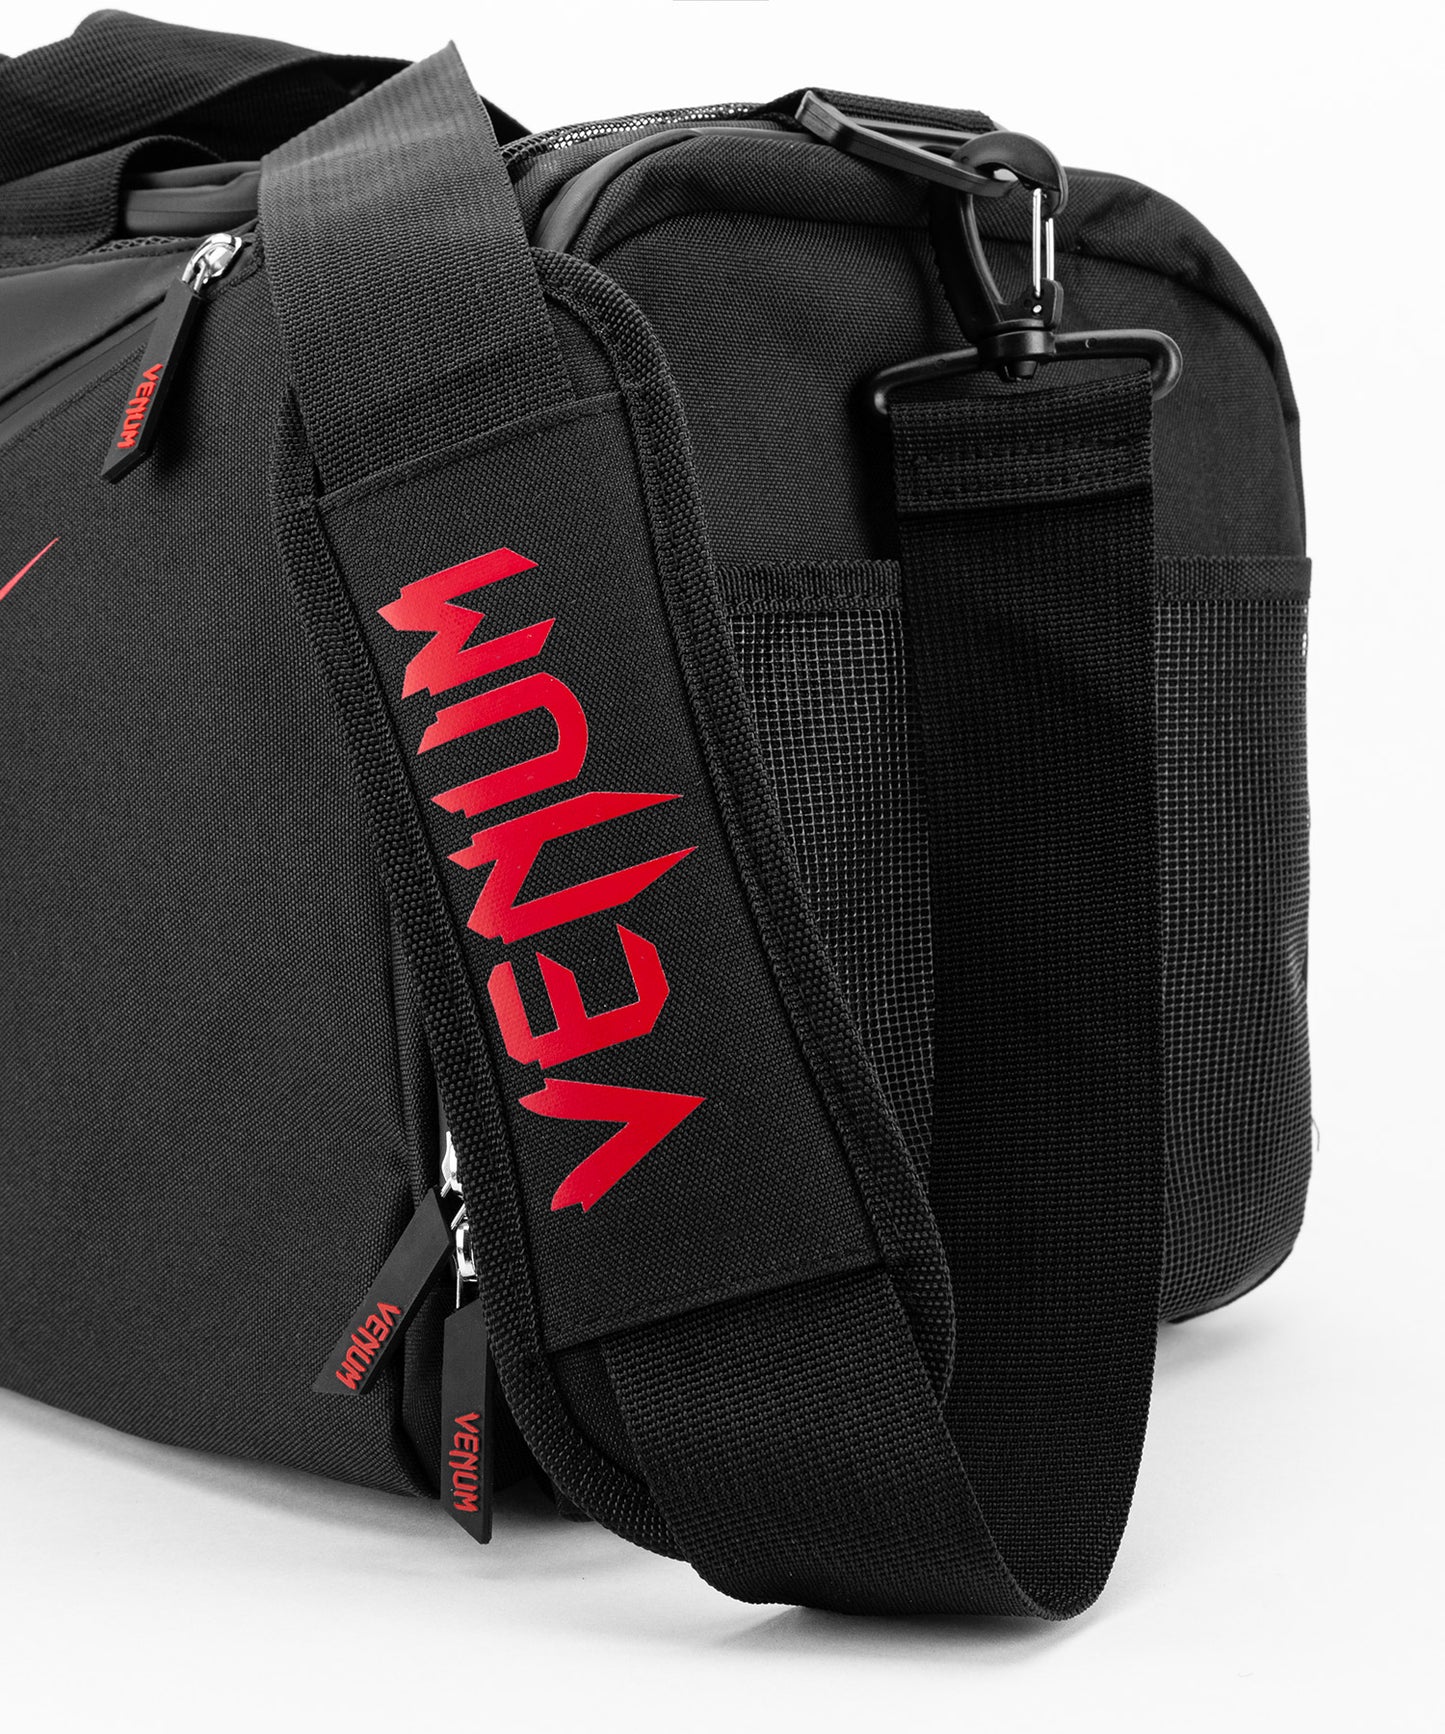 Venum Trainer Lite Evo Sports Bags - Black/Red